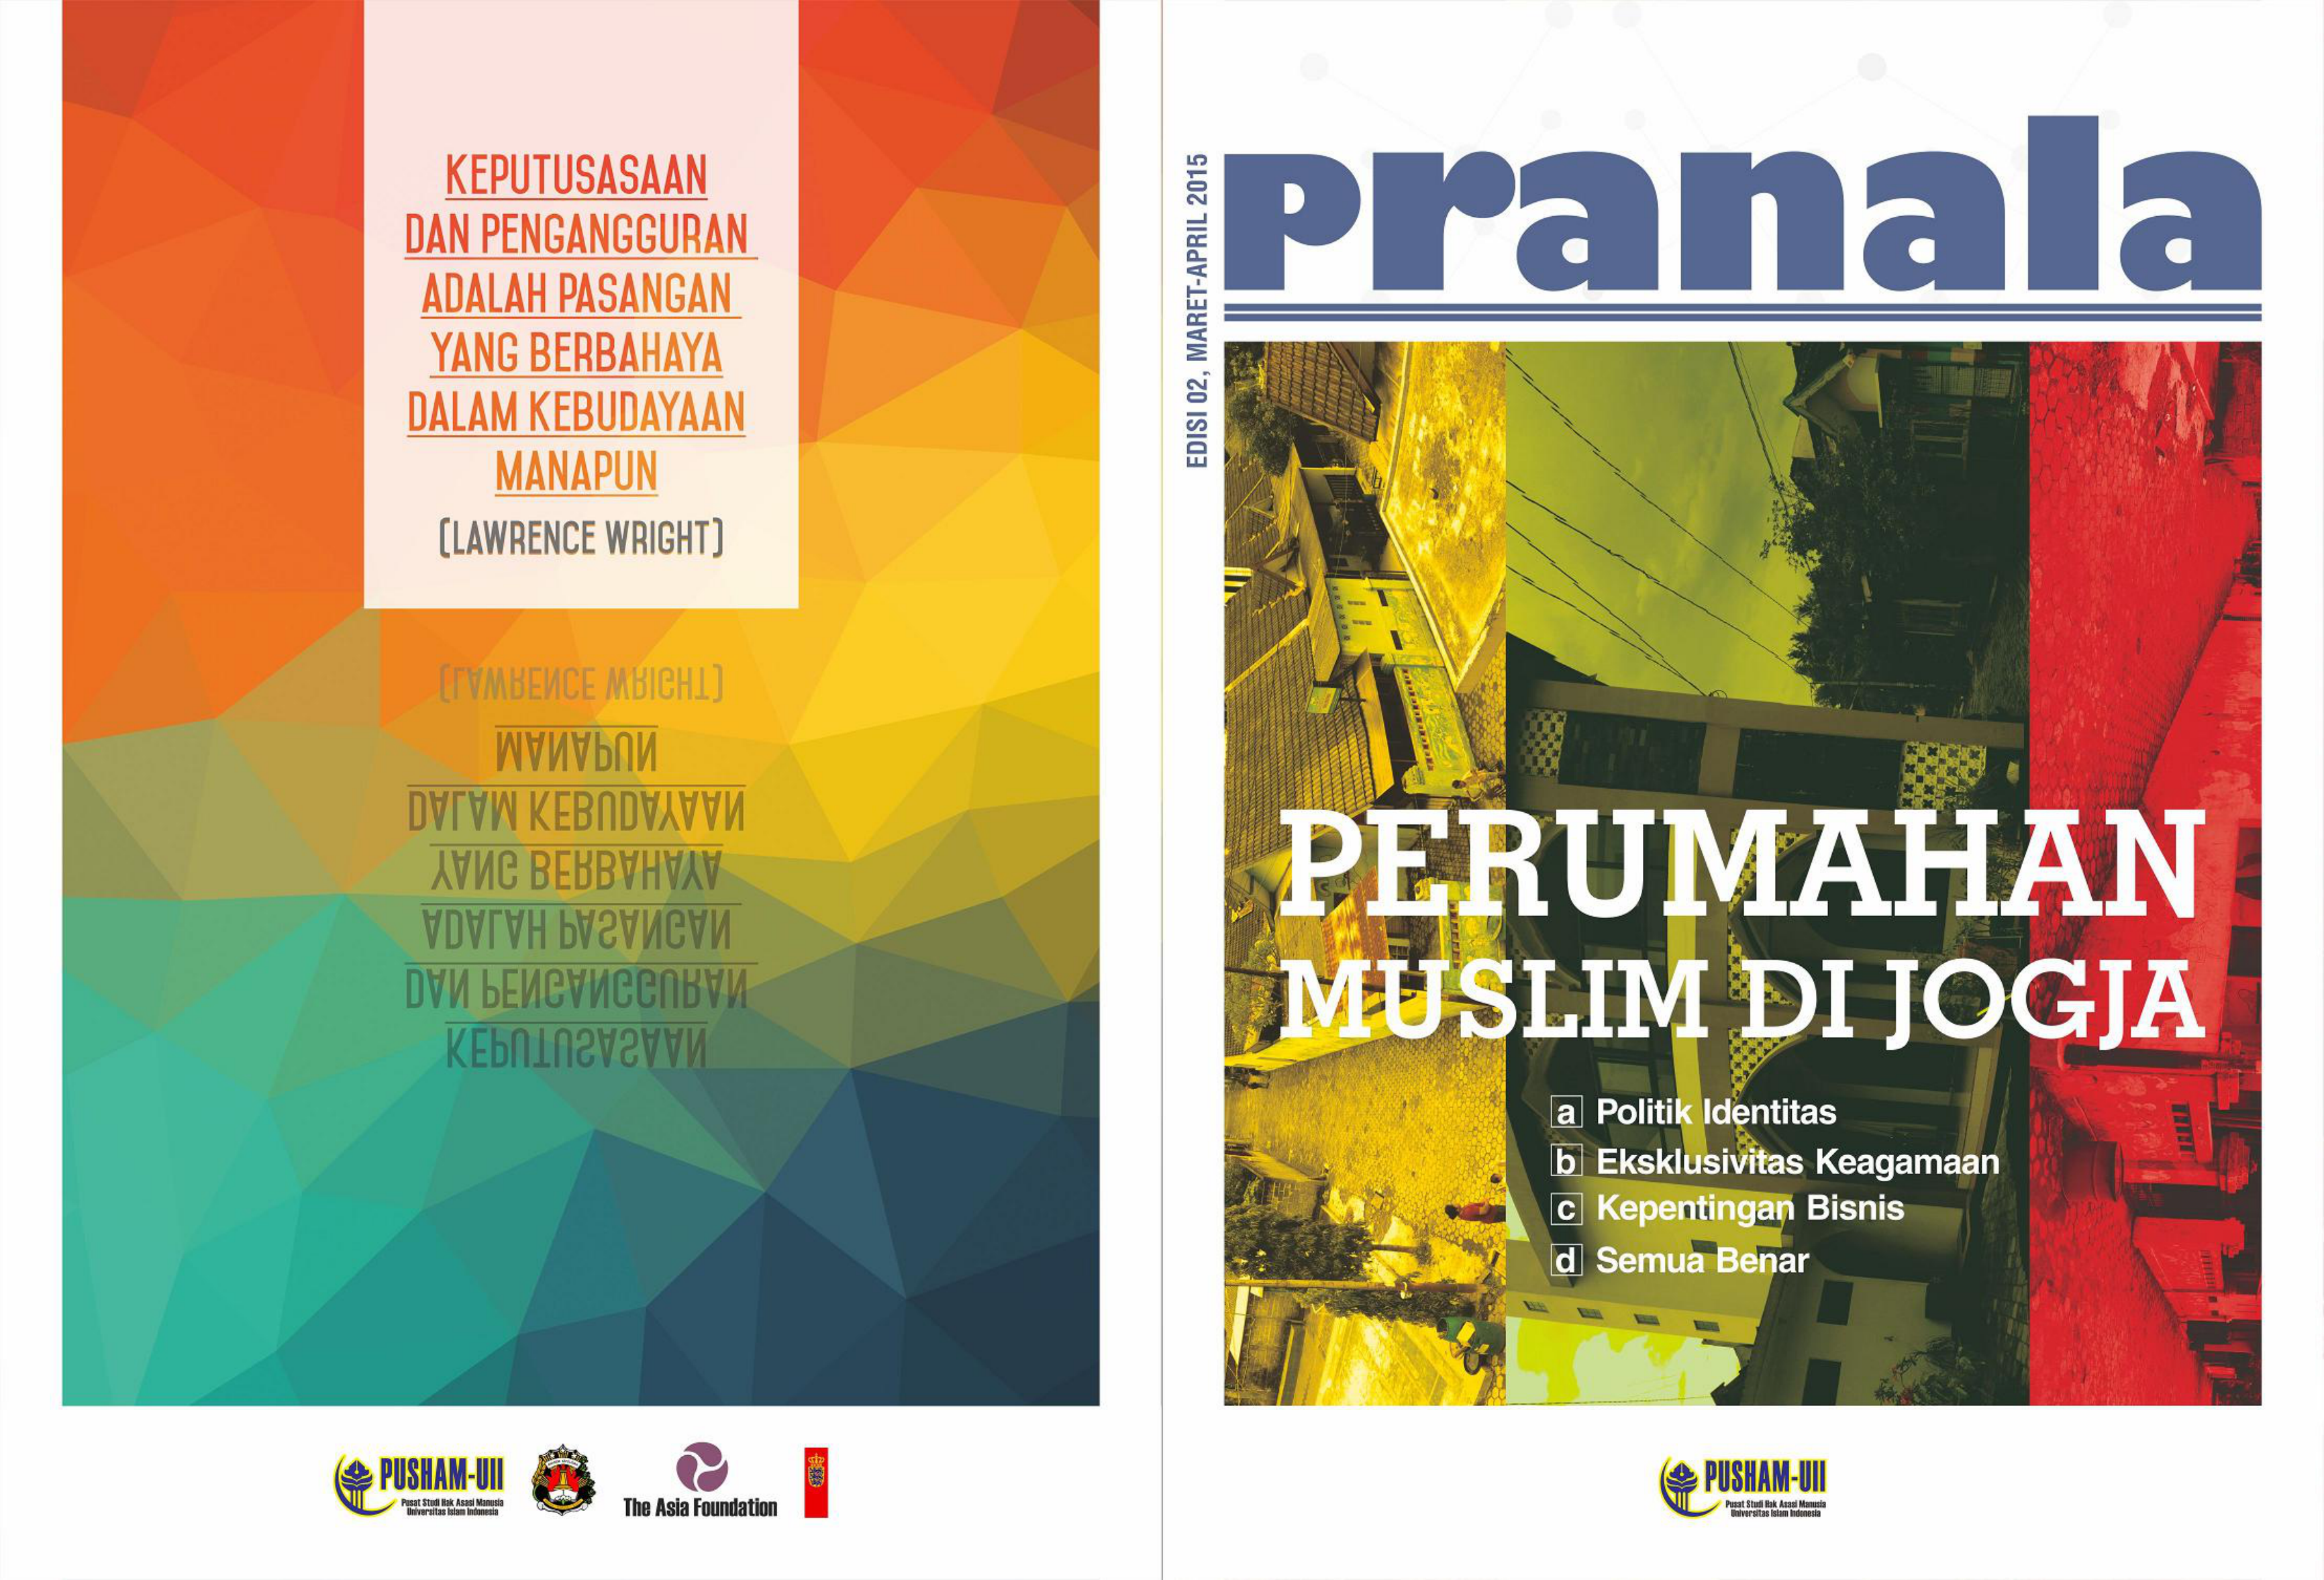 Lalu Bangsa Menarik membaca majalah Pranala edisi perdana yang mengangkat topik utama gagalnya pemutaran film Senyap di berbagai tempat di Yogyakarta